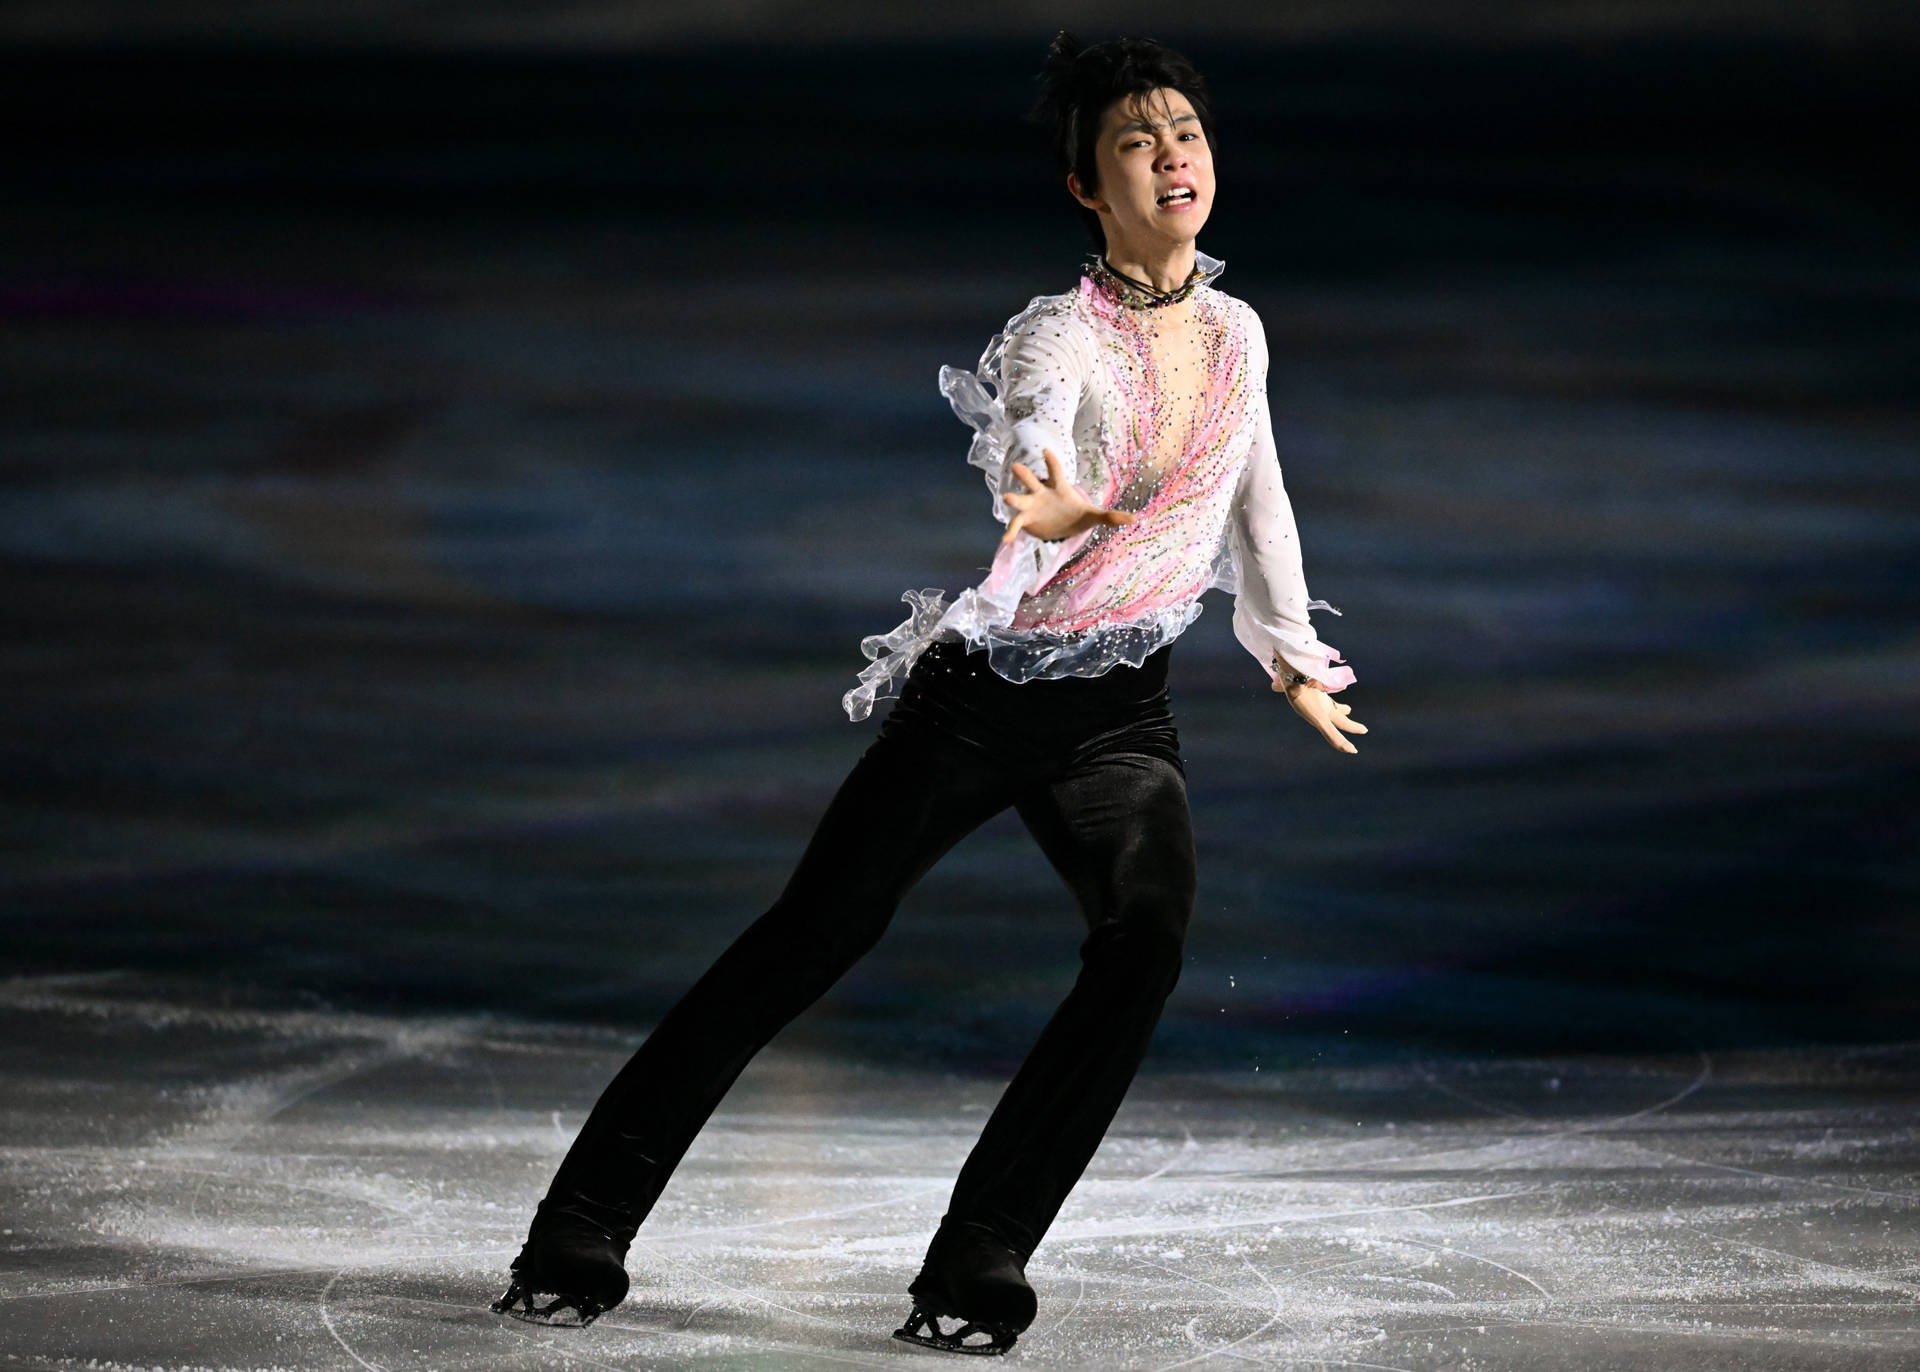 Atletadi Pattinaggio Artistico Giapponese Yuzuru Hanyu Alle Olimpiadi Invernali. Sfondo